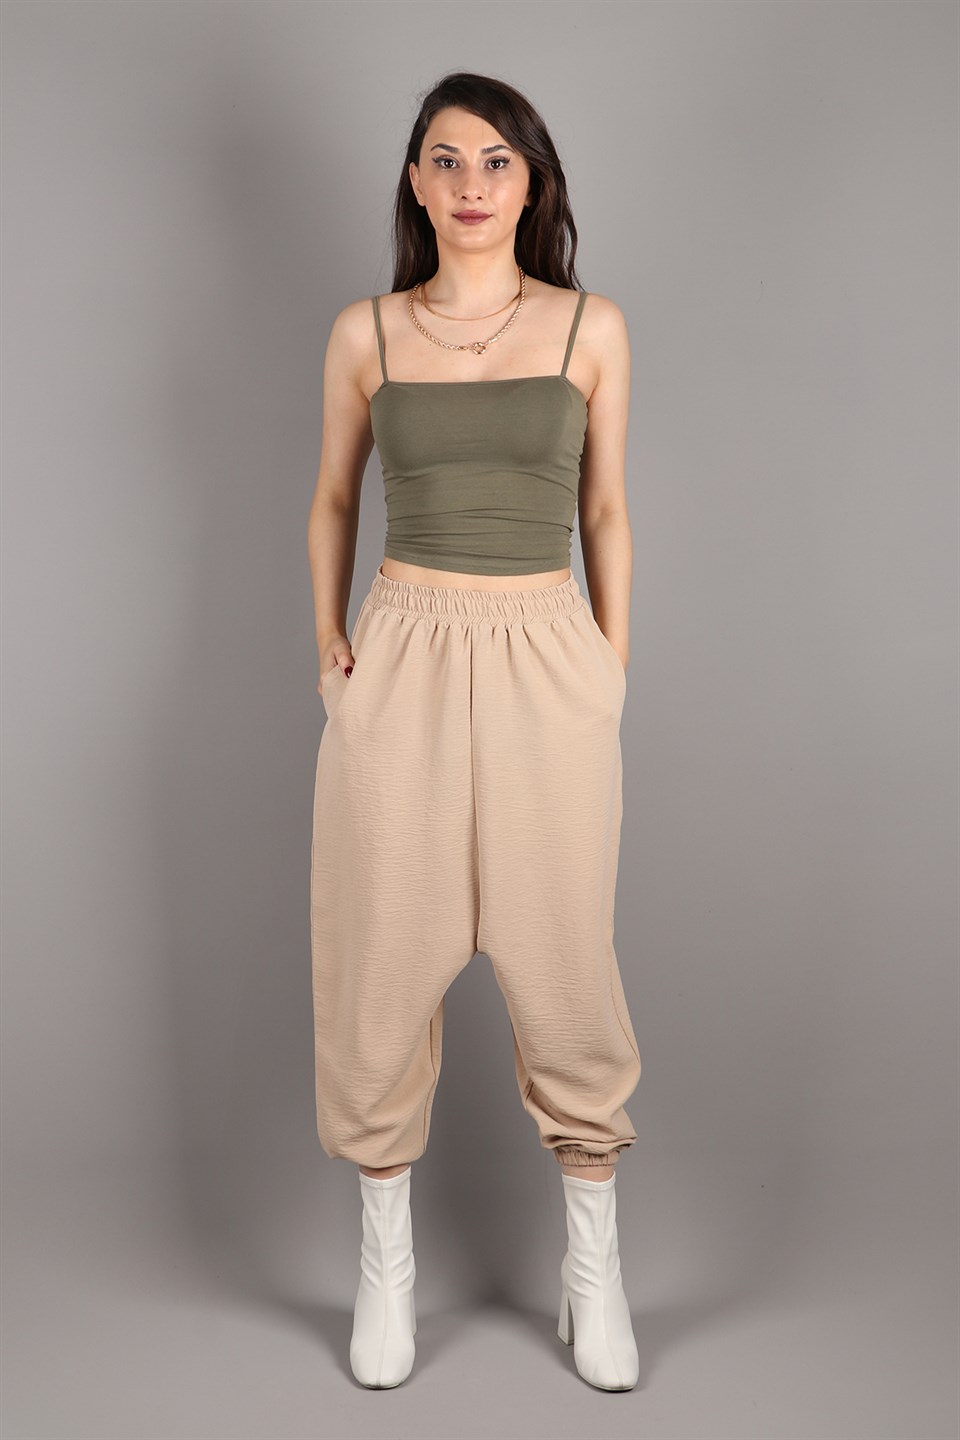 Kadın Şalvar Pantolon | Pantolon Modelleri - RICH | rich.com.tr